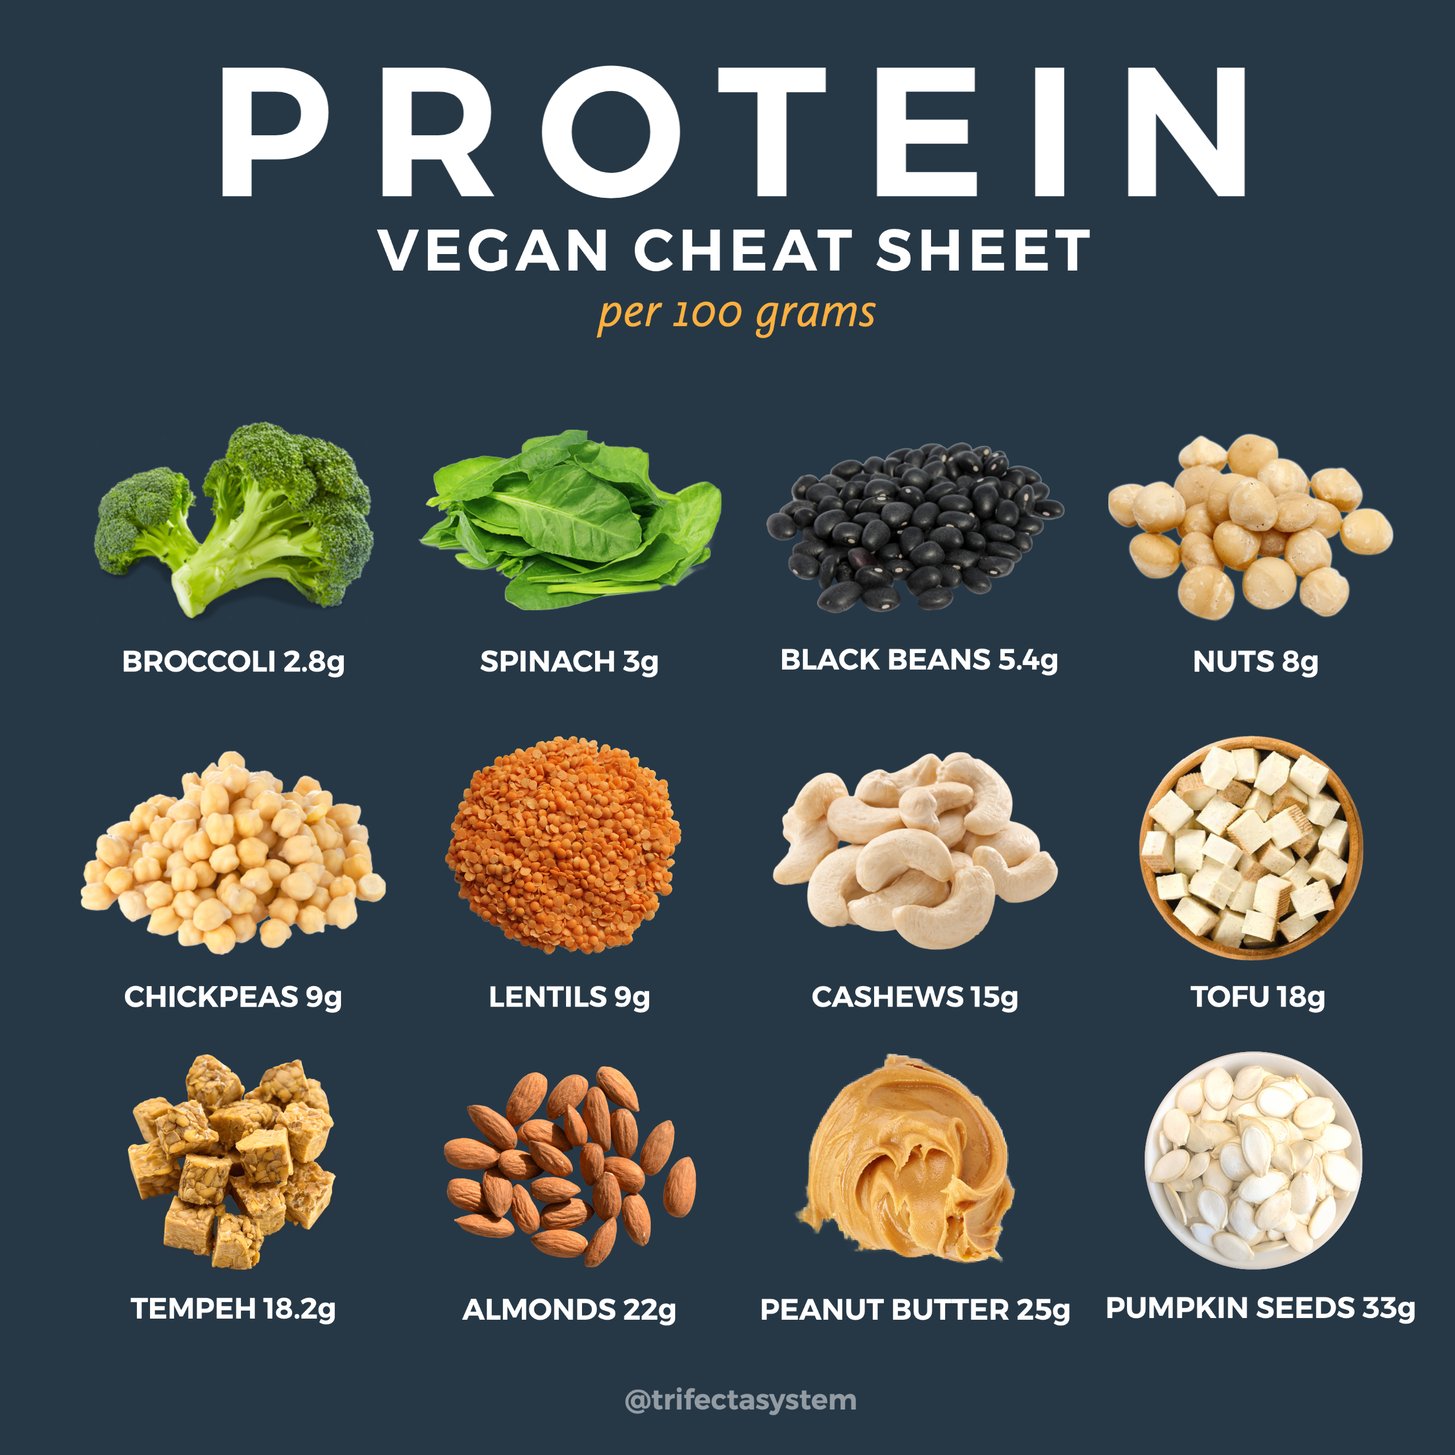 Vegan Protein Social ?width=1455&name=vegan Protein Social 